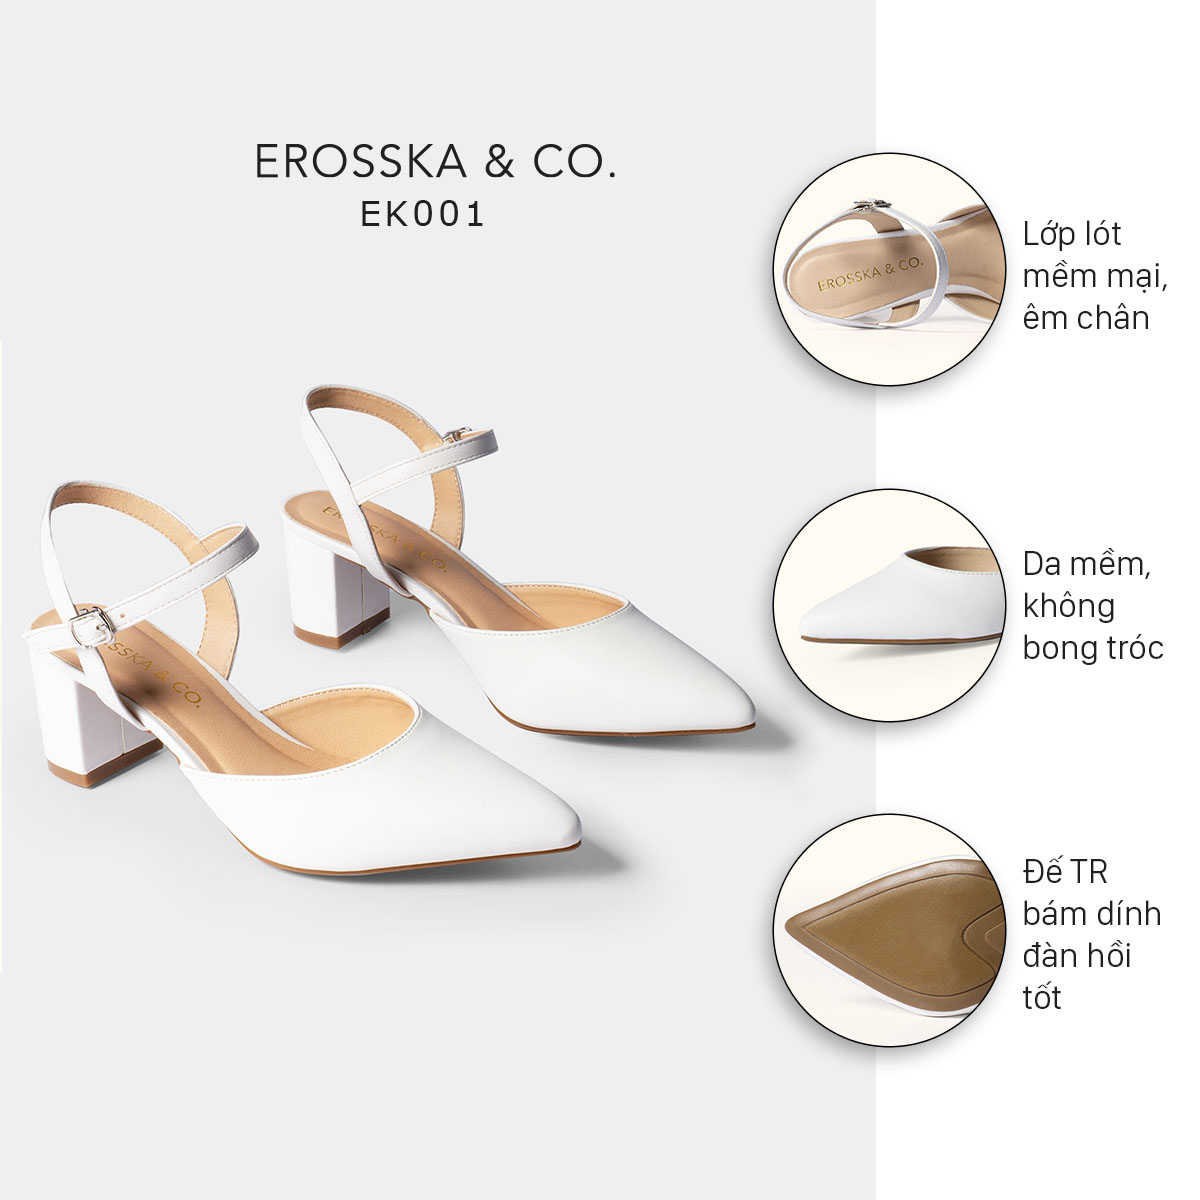 Giày cao gót Erosska mũi nhọn phối dây hở gót cao 5cm màu nude _ EK001